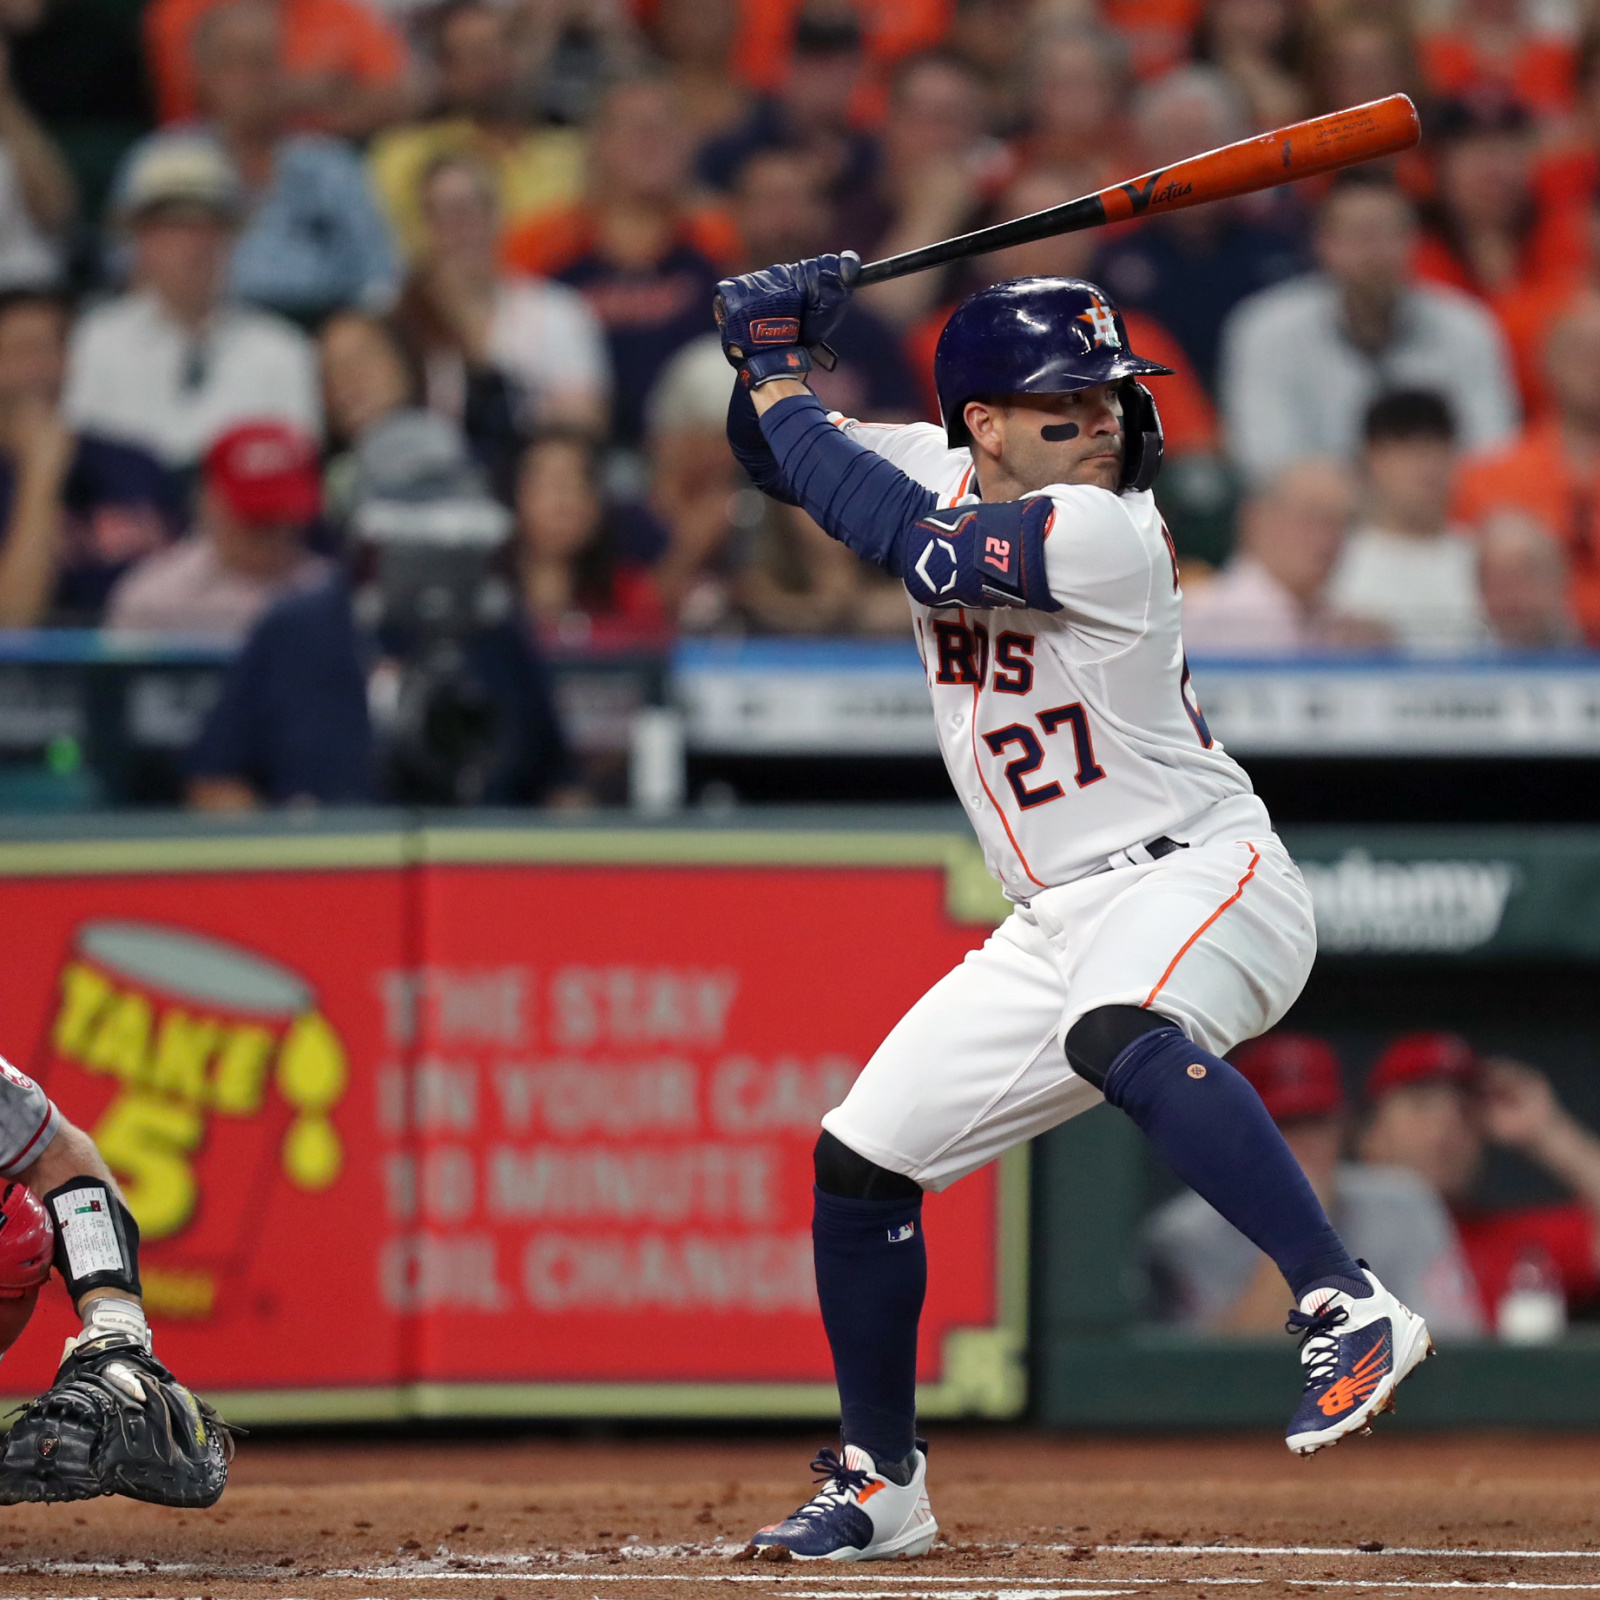 Will Peña's struggles drop him down the Astros batting order?